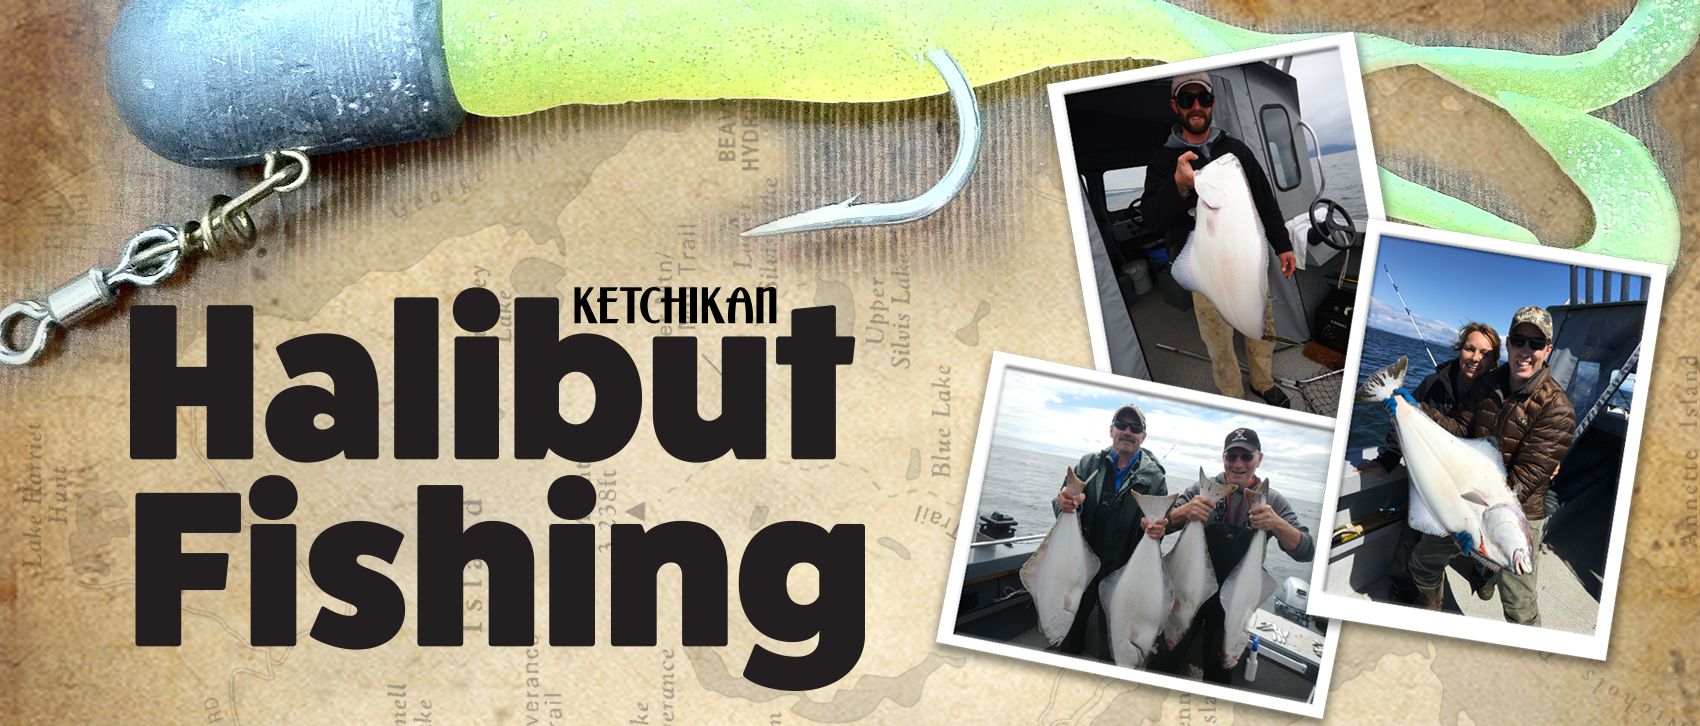 Ketchikan Halibut Fishing Charters